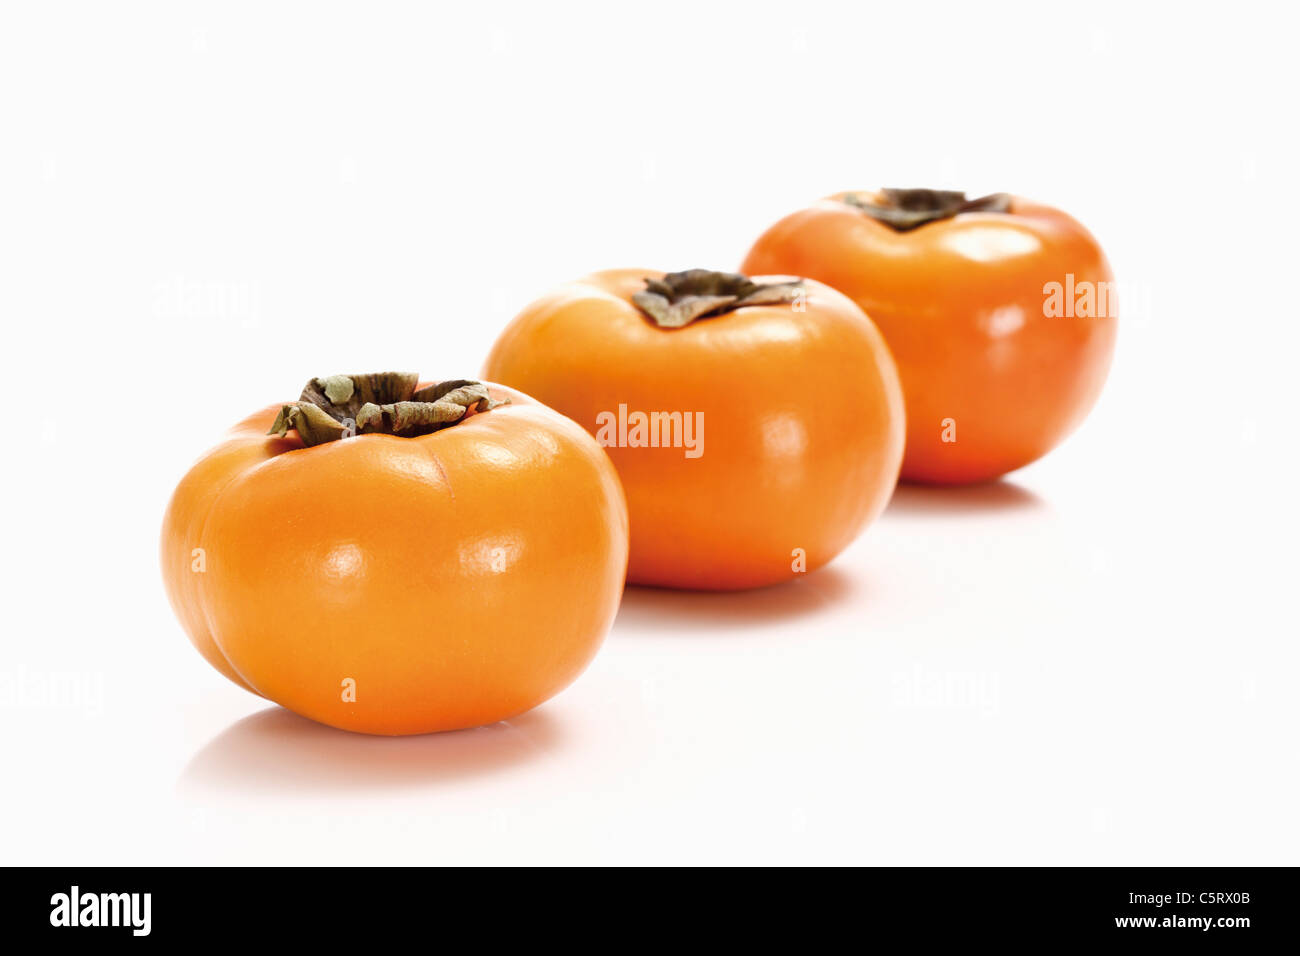 Kaki fruit High Resolution Stock Photography and Images - Alamy